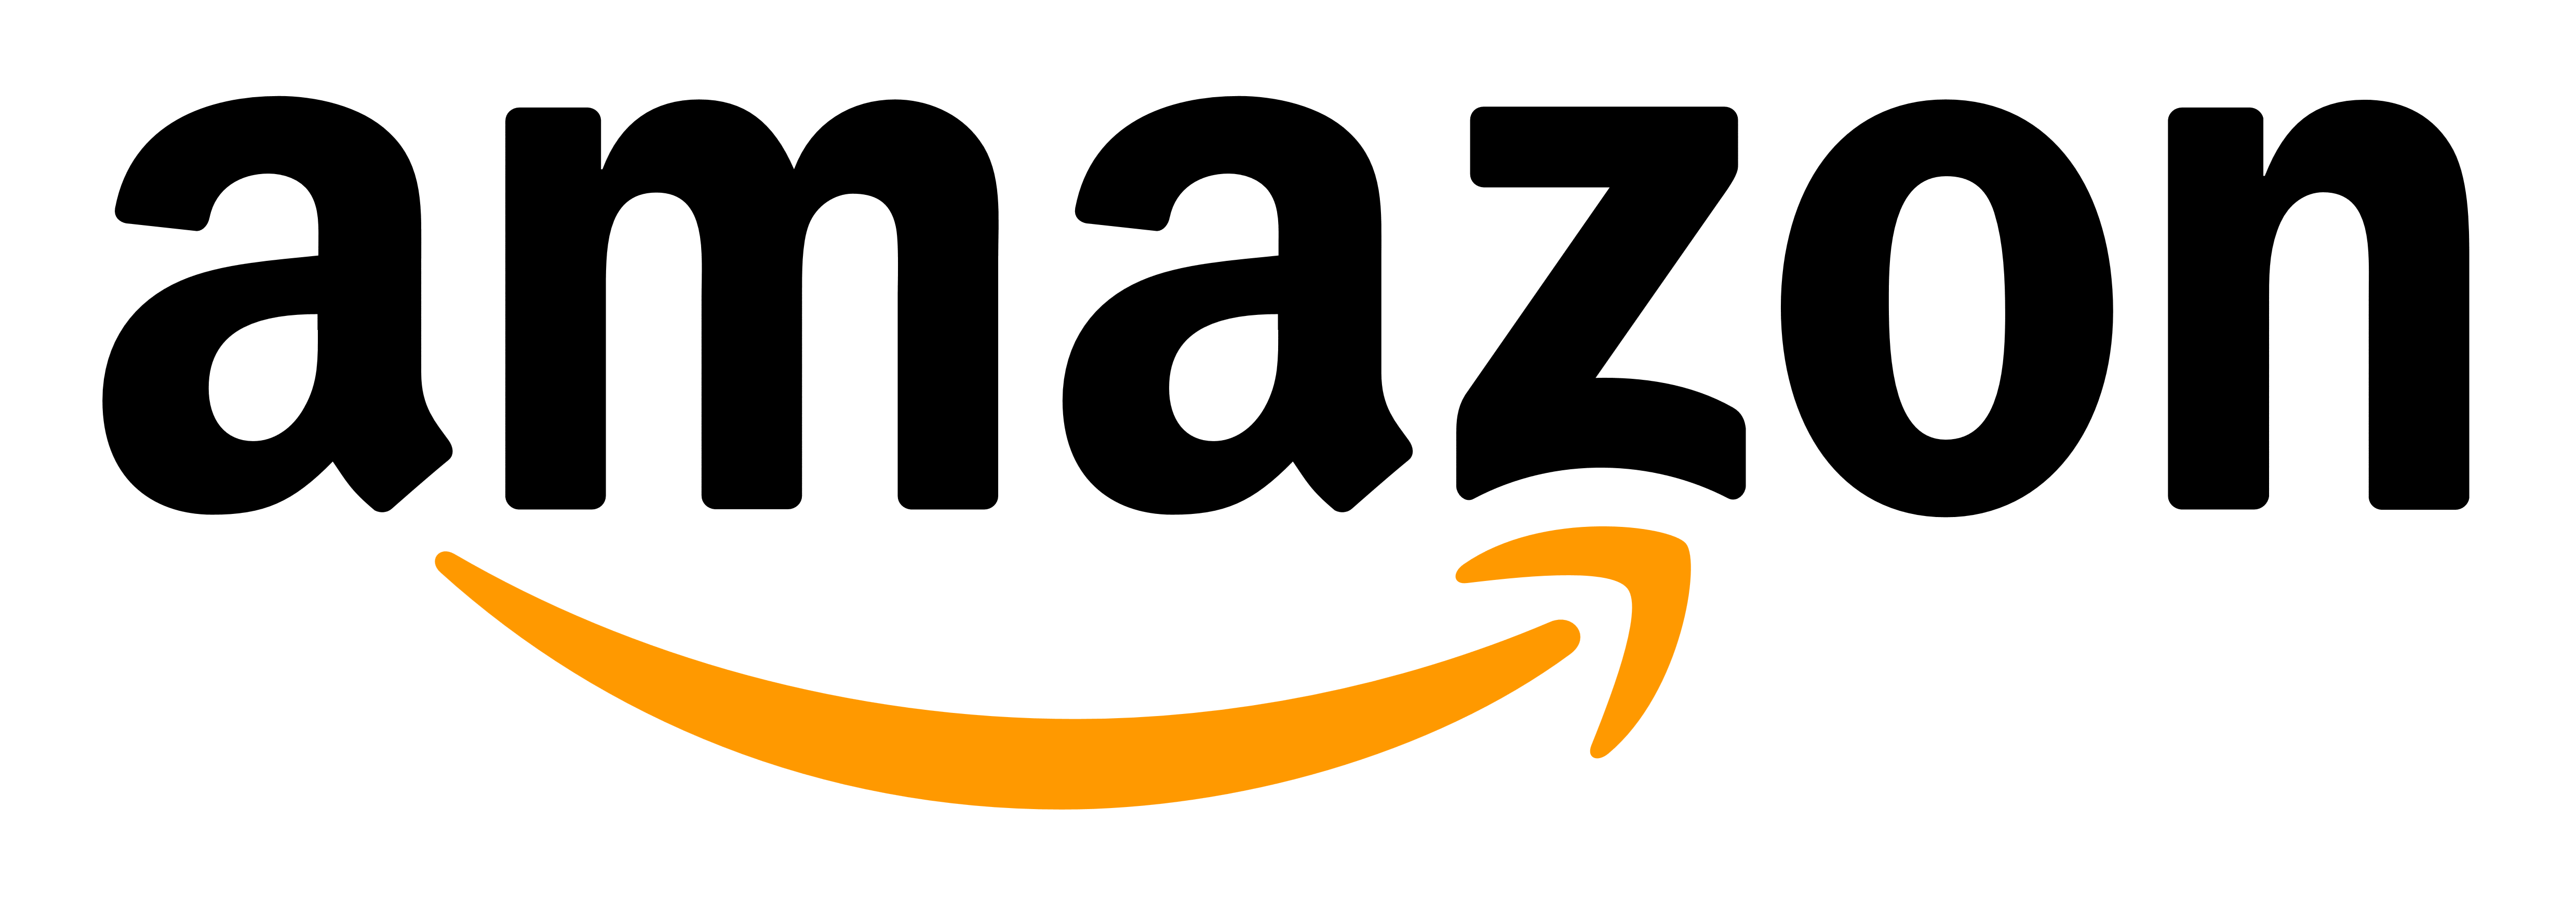 Amazon  Logos brands and logotypes